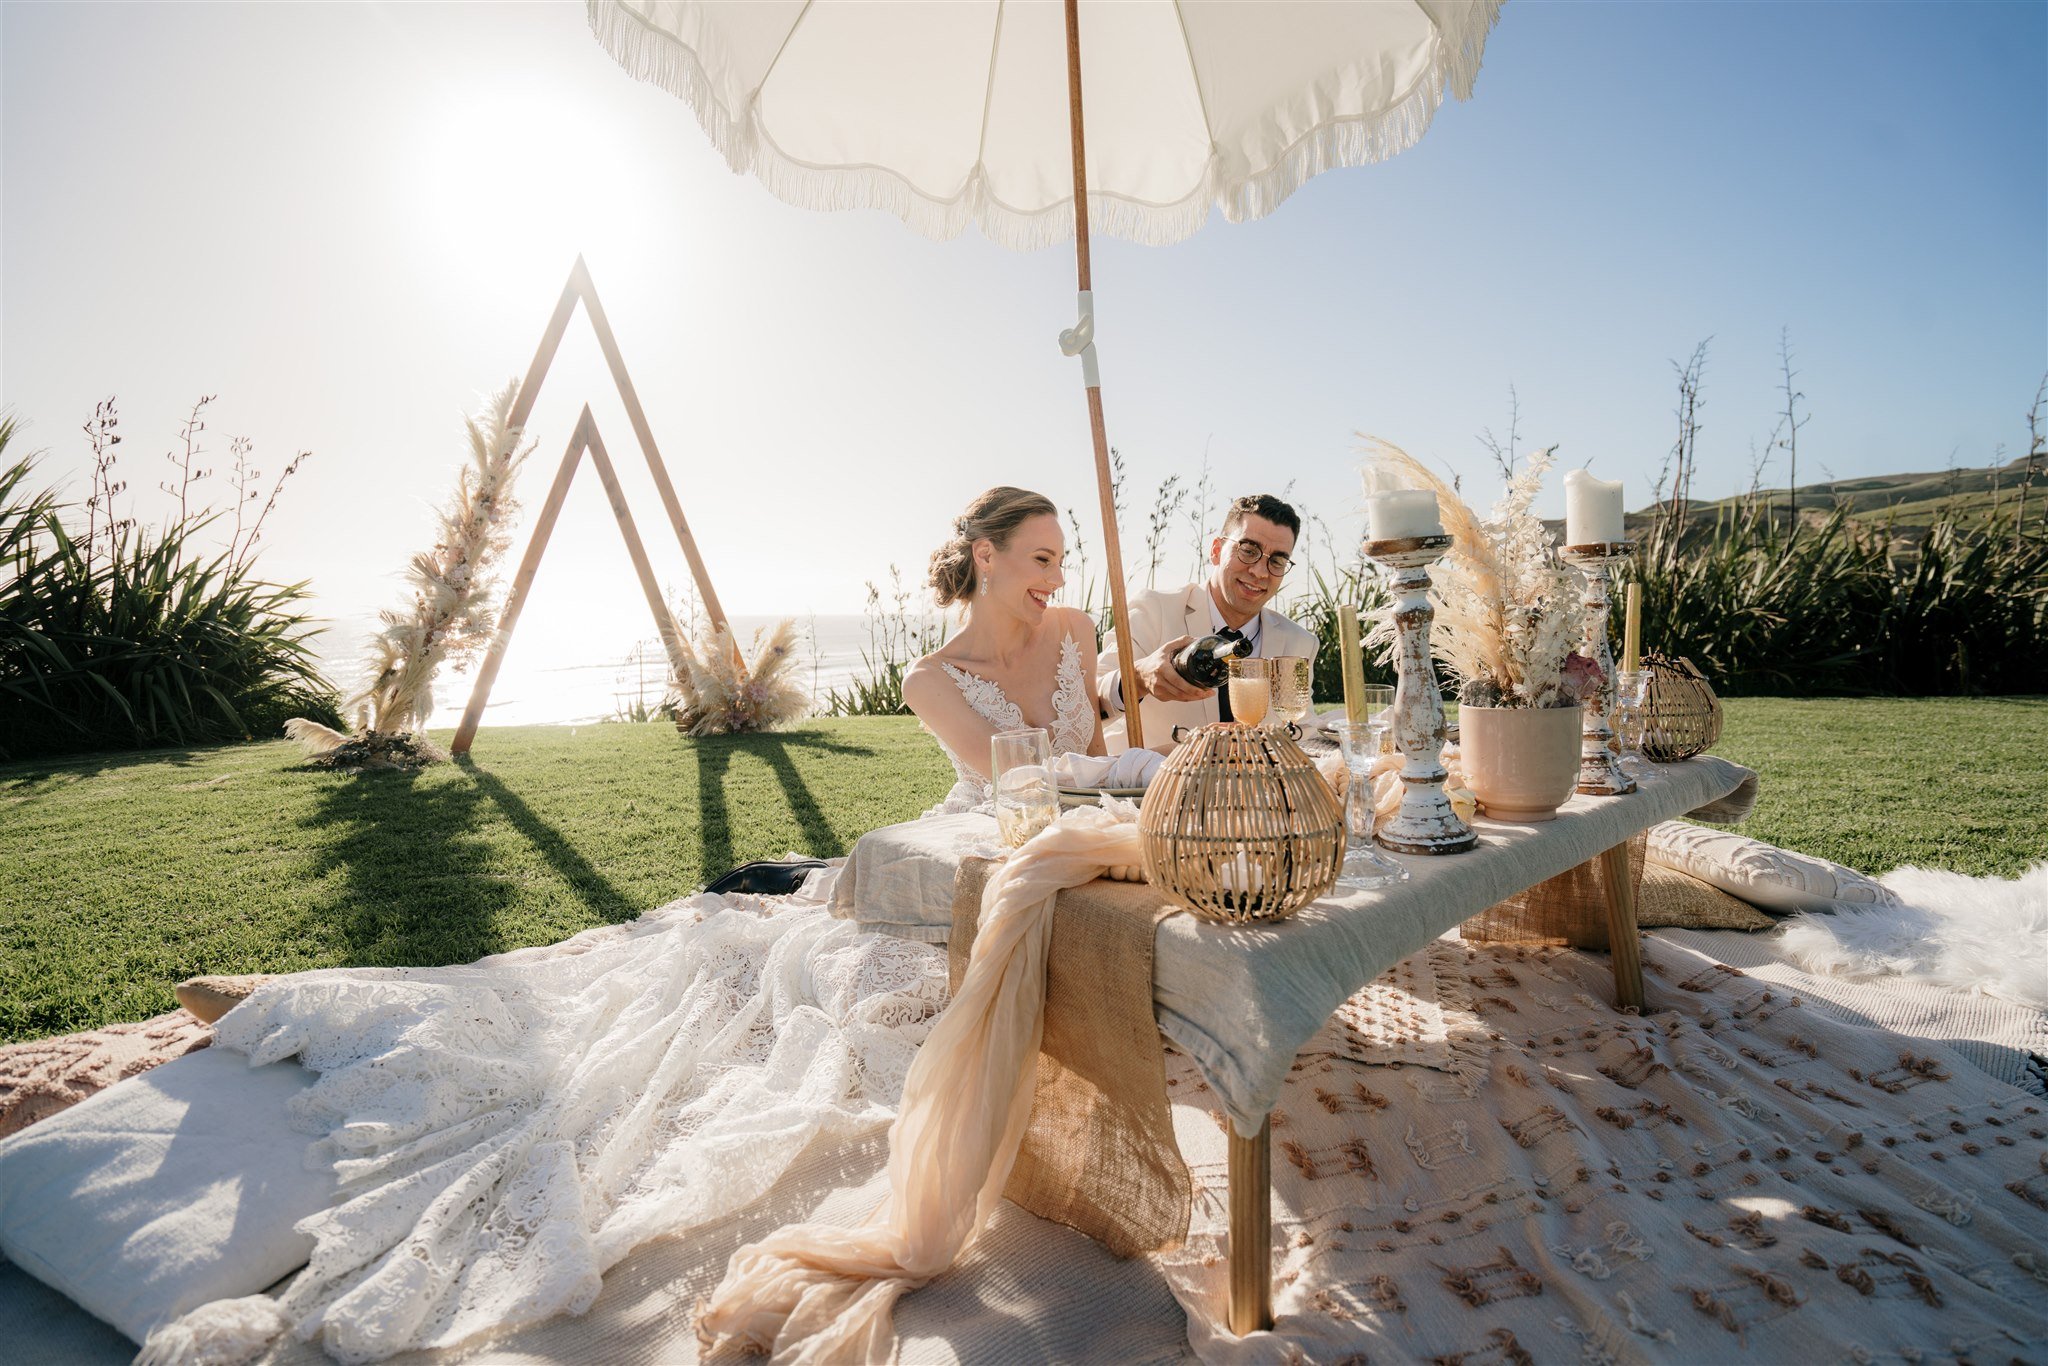 castaways-NZ-new-zealand-auckland-wedding-photographer-photography-videography-film-dear-white-productions-best-venue-waiuku-engagement-elopement-style-beach-intimate (274).jpg